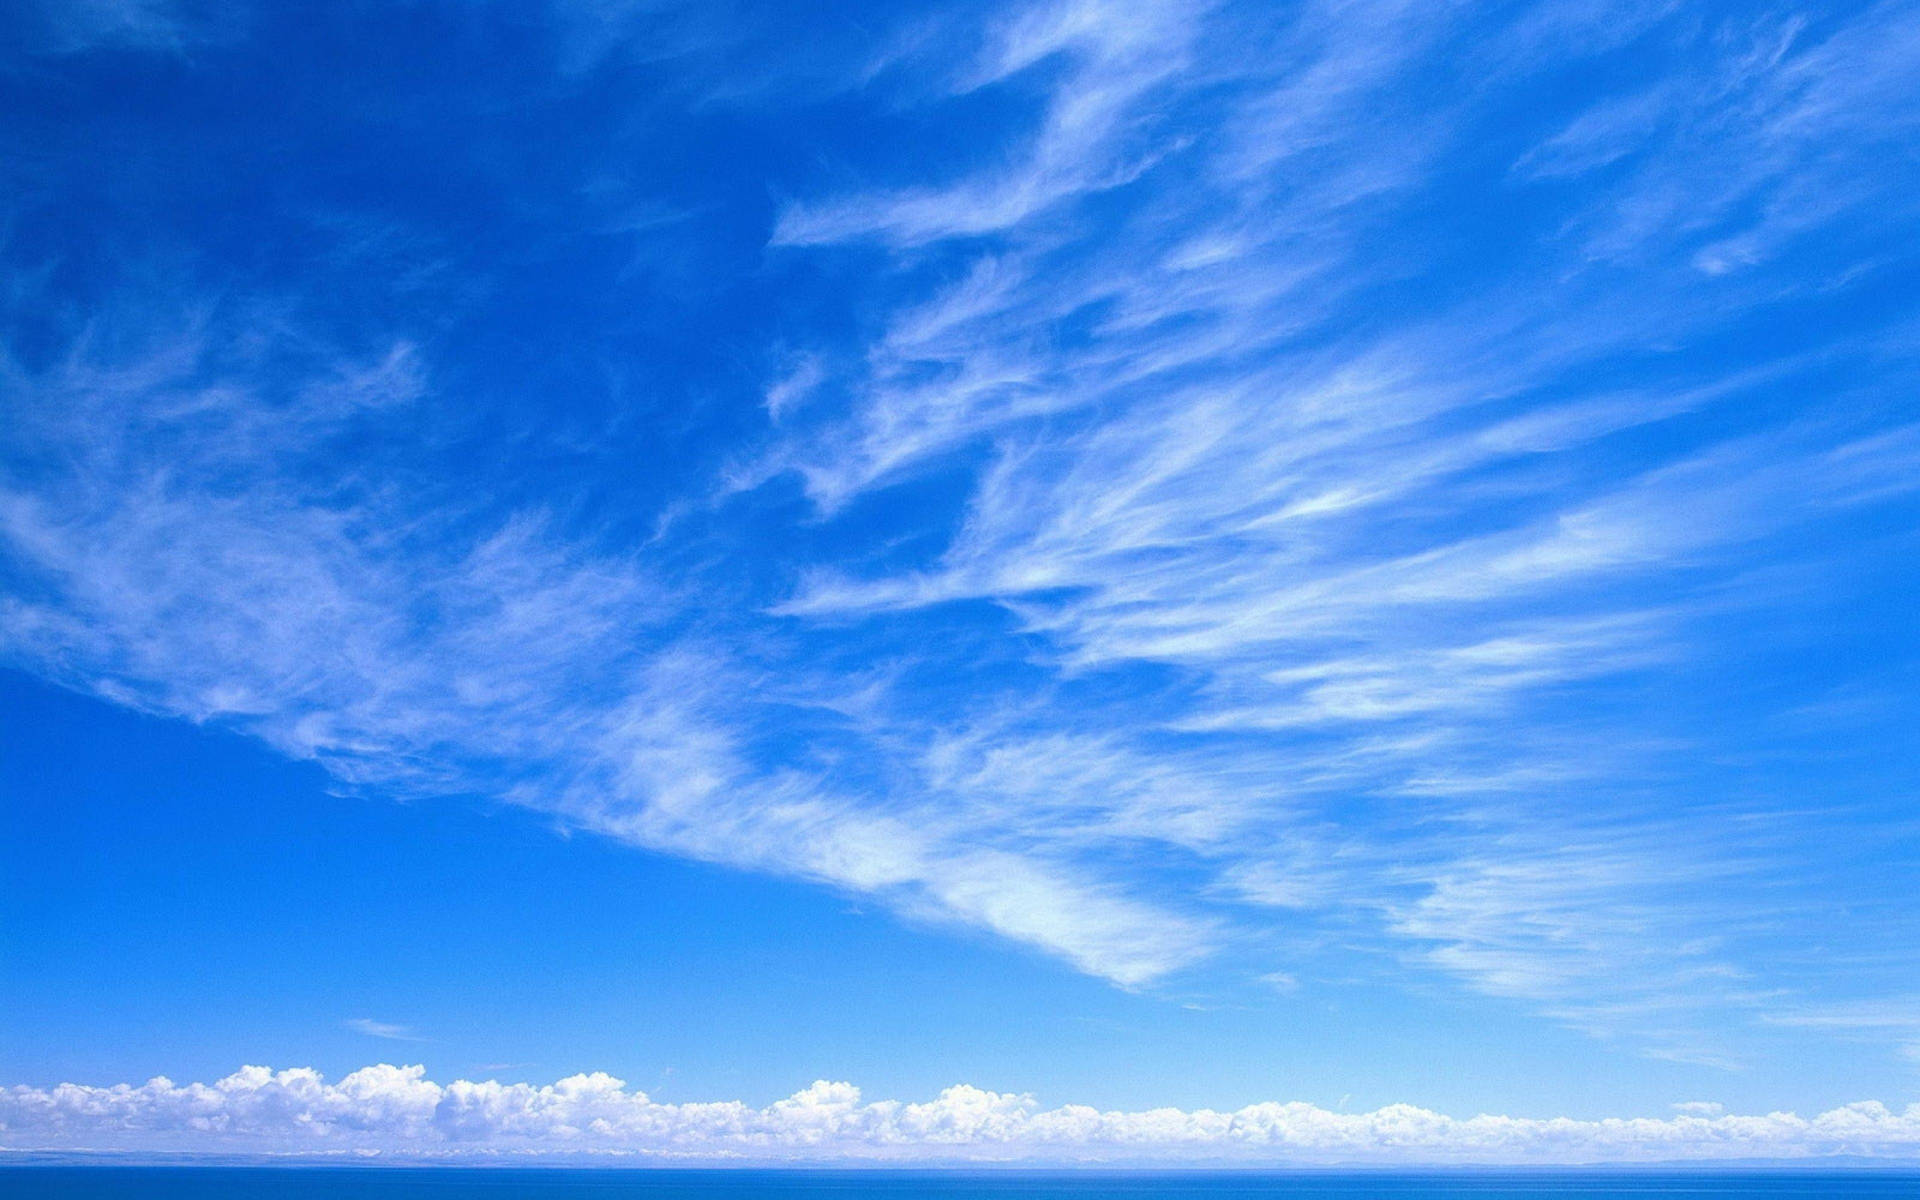 Cloud Wallpapers: Free HD Download [500+ HQ] | Unsplash